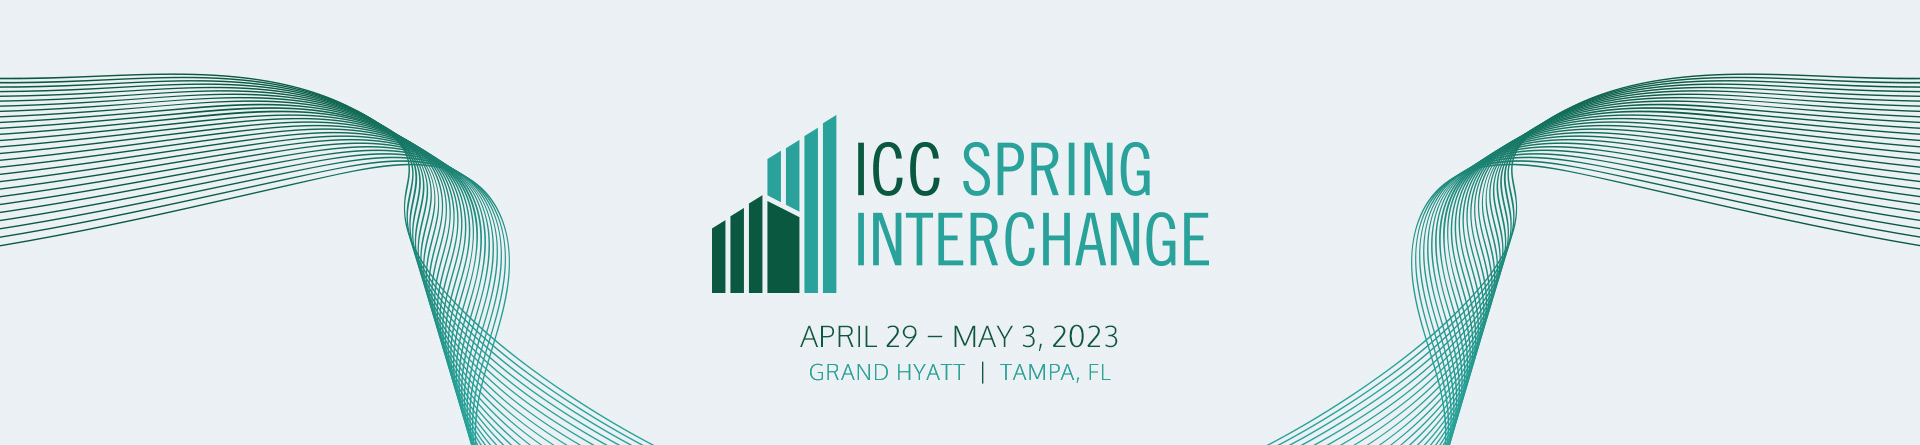 ICC Spring Interchange